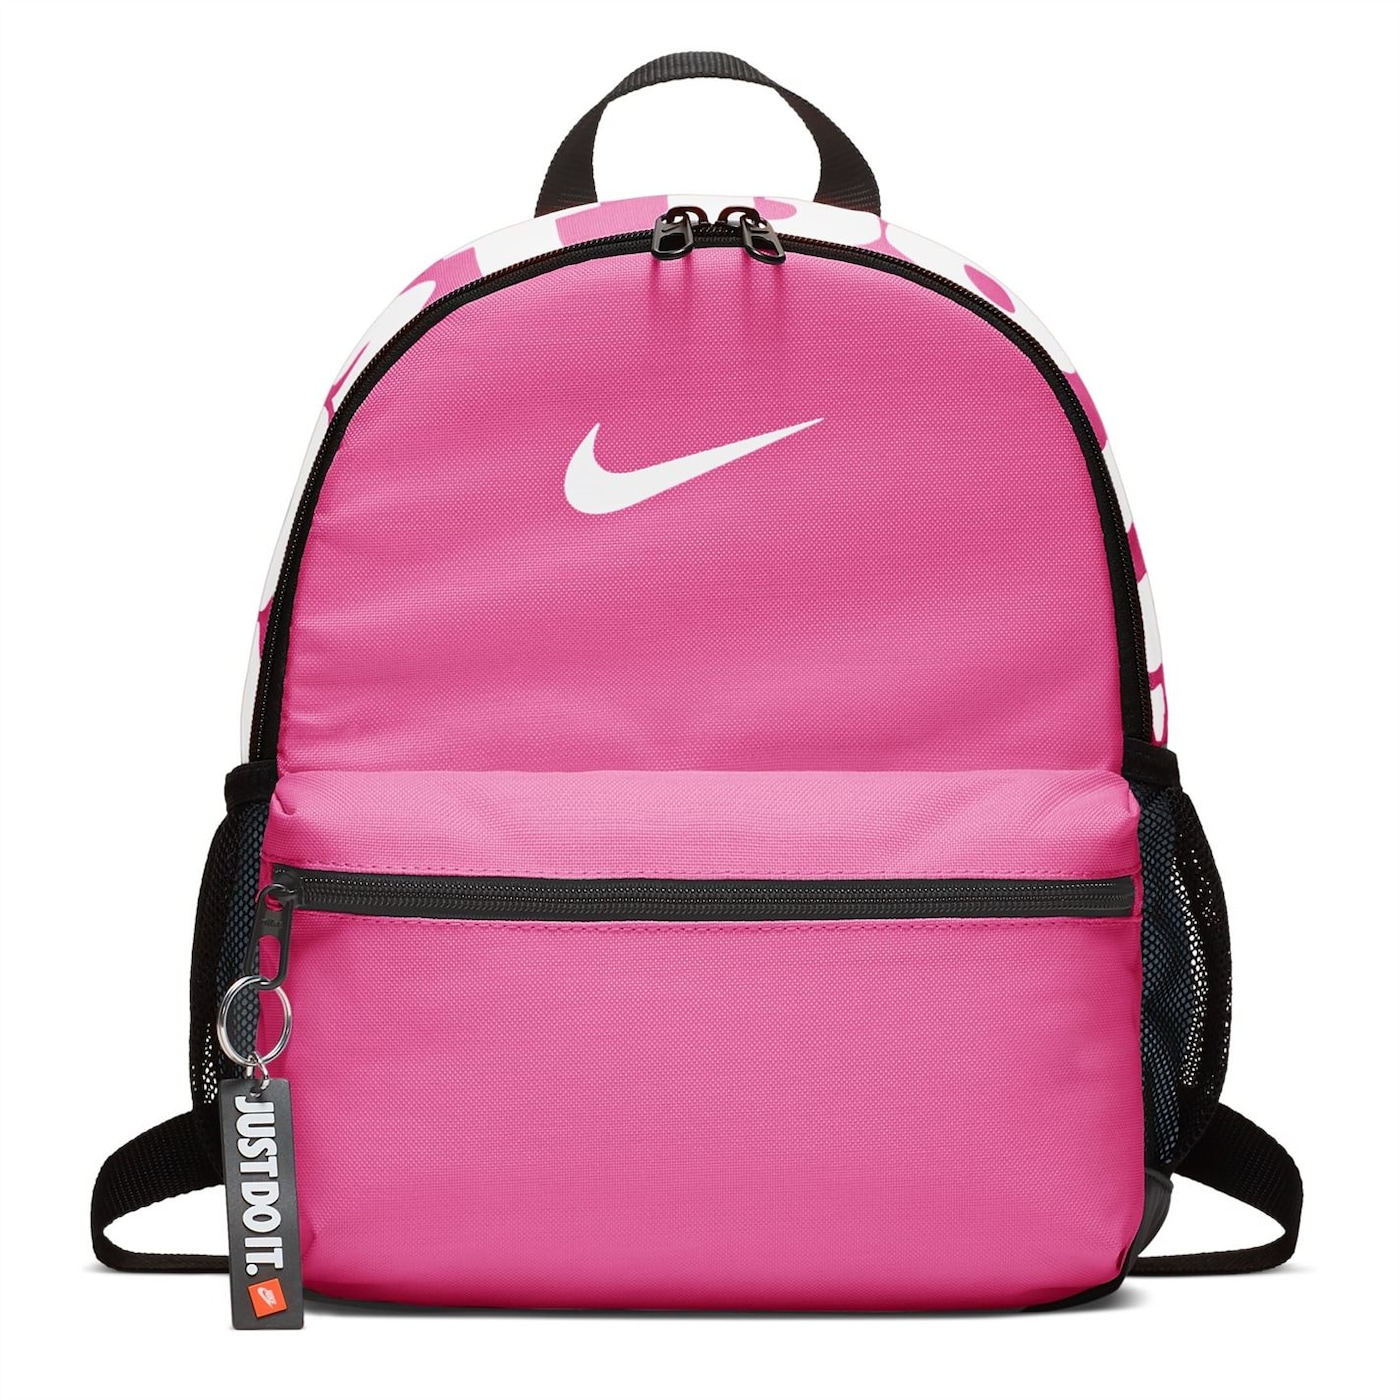 Аксесоари  Раници и чанти  Детски раници Nike Brasilia Mini Backpack Junior 1387720-7559603